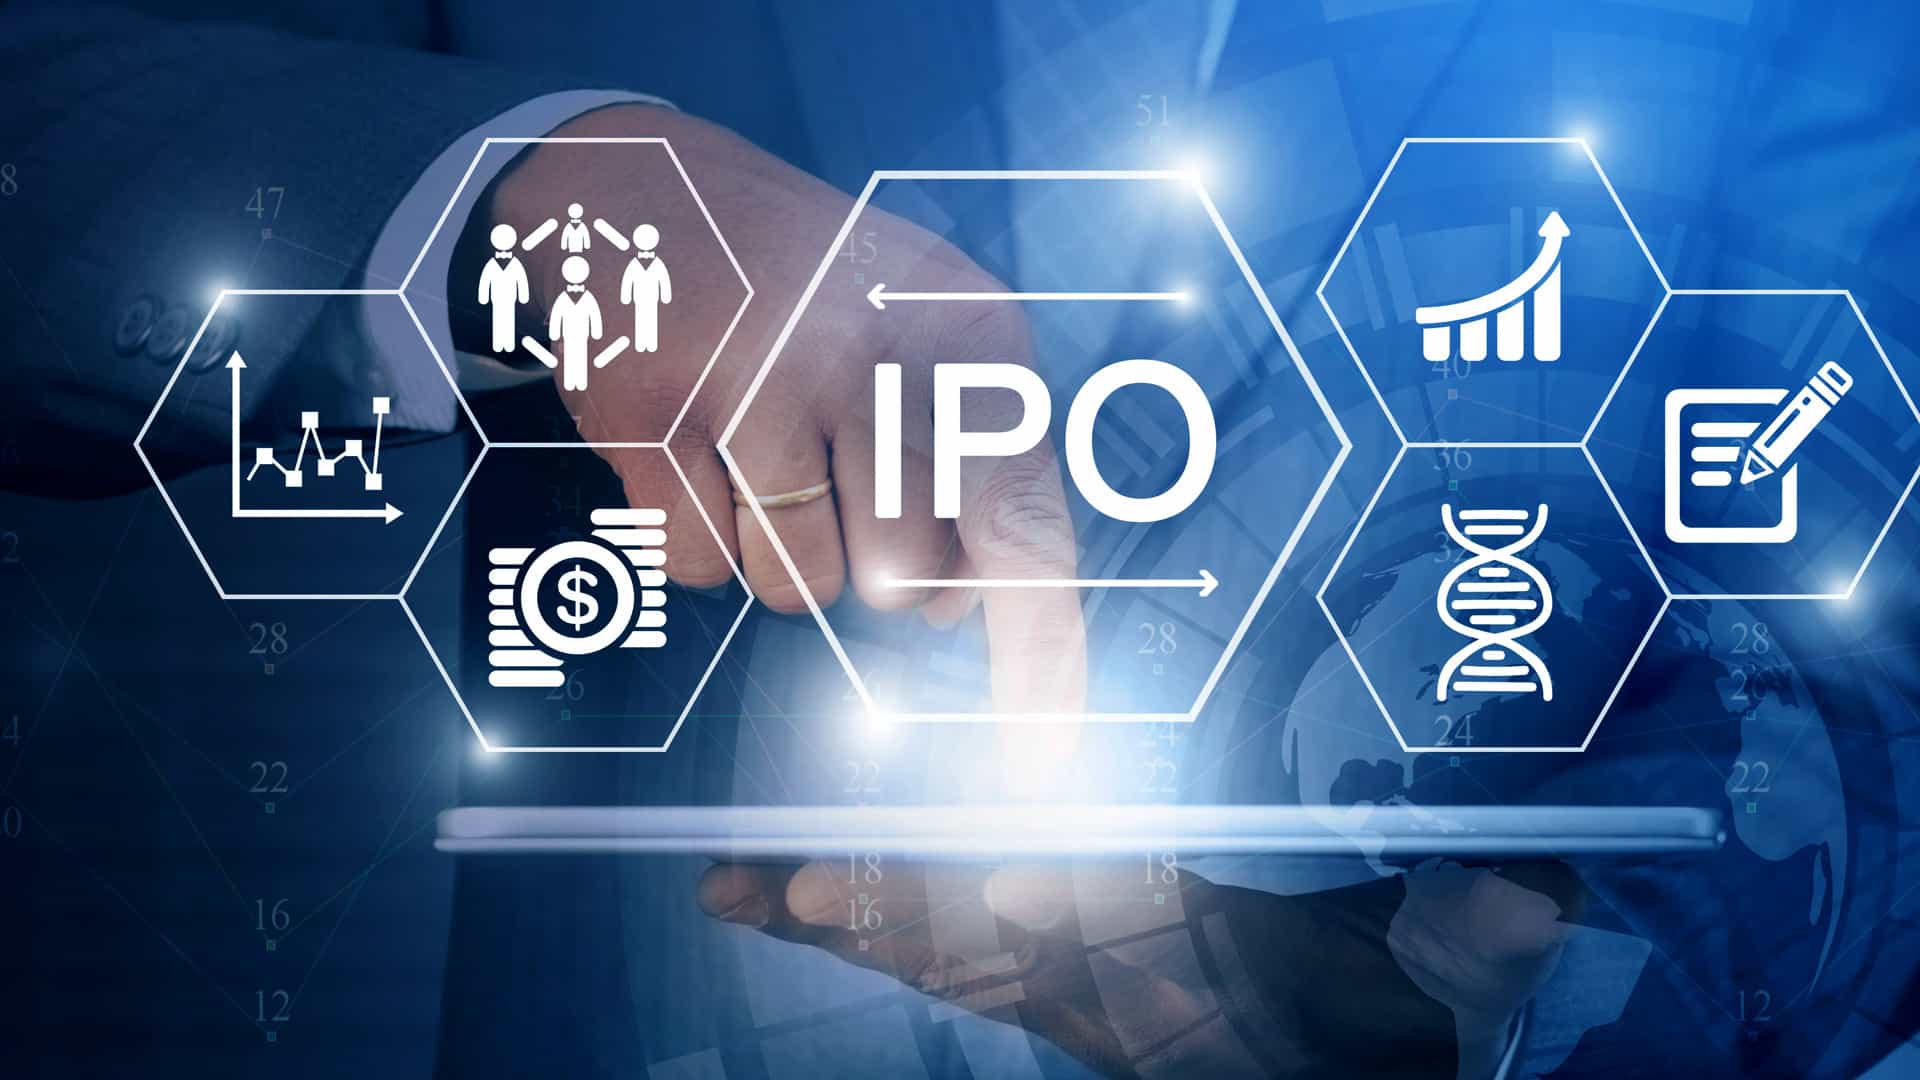 Aditya Birla Sun Life AMC raises Rs 789 cr from anchor investors ahead of IPO